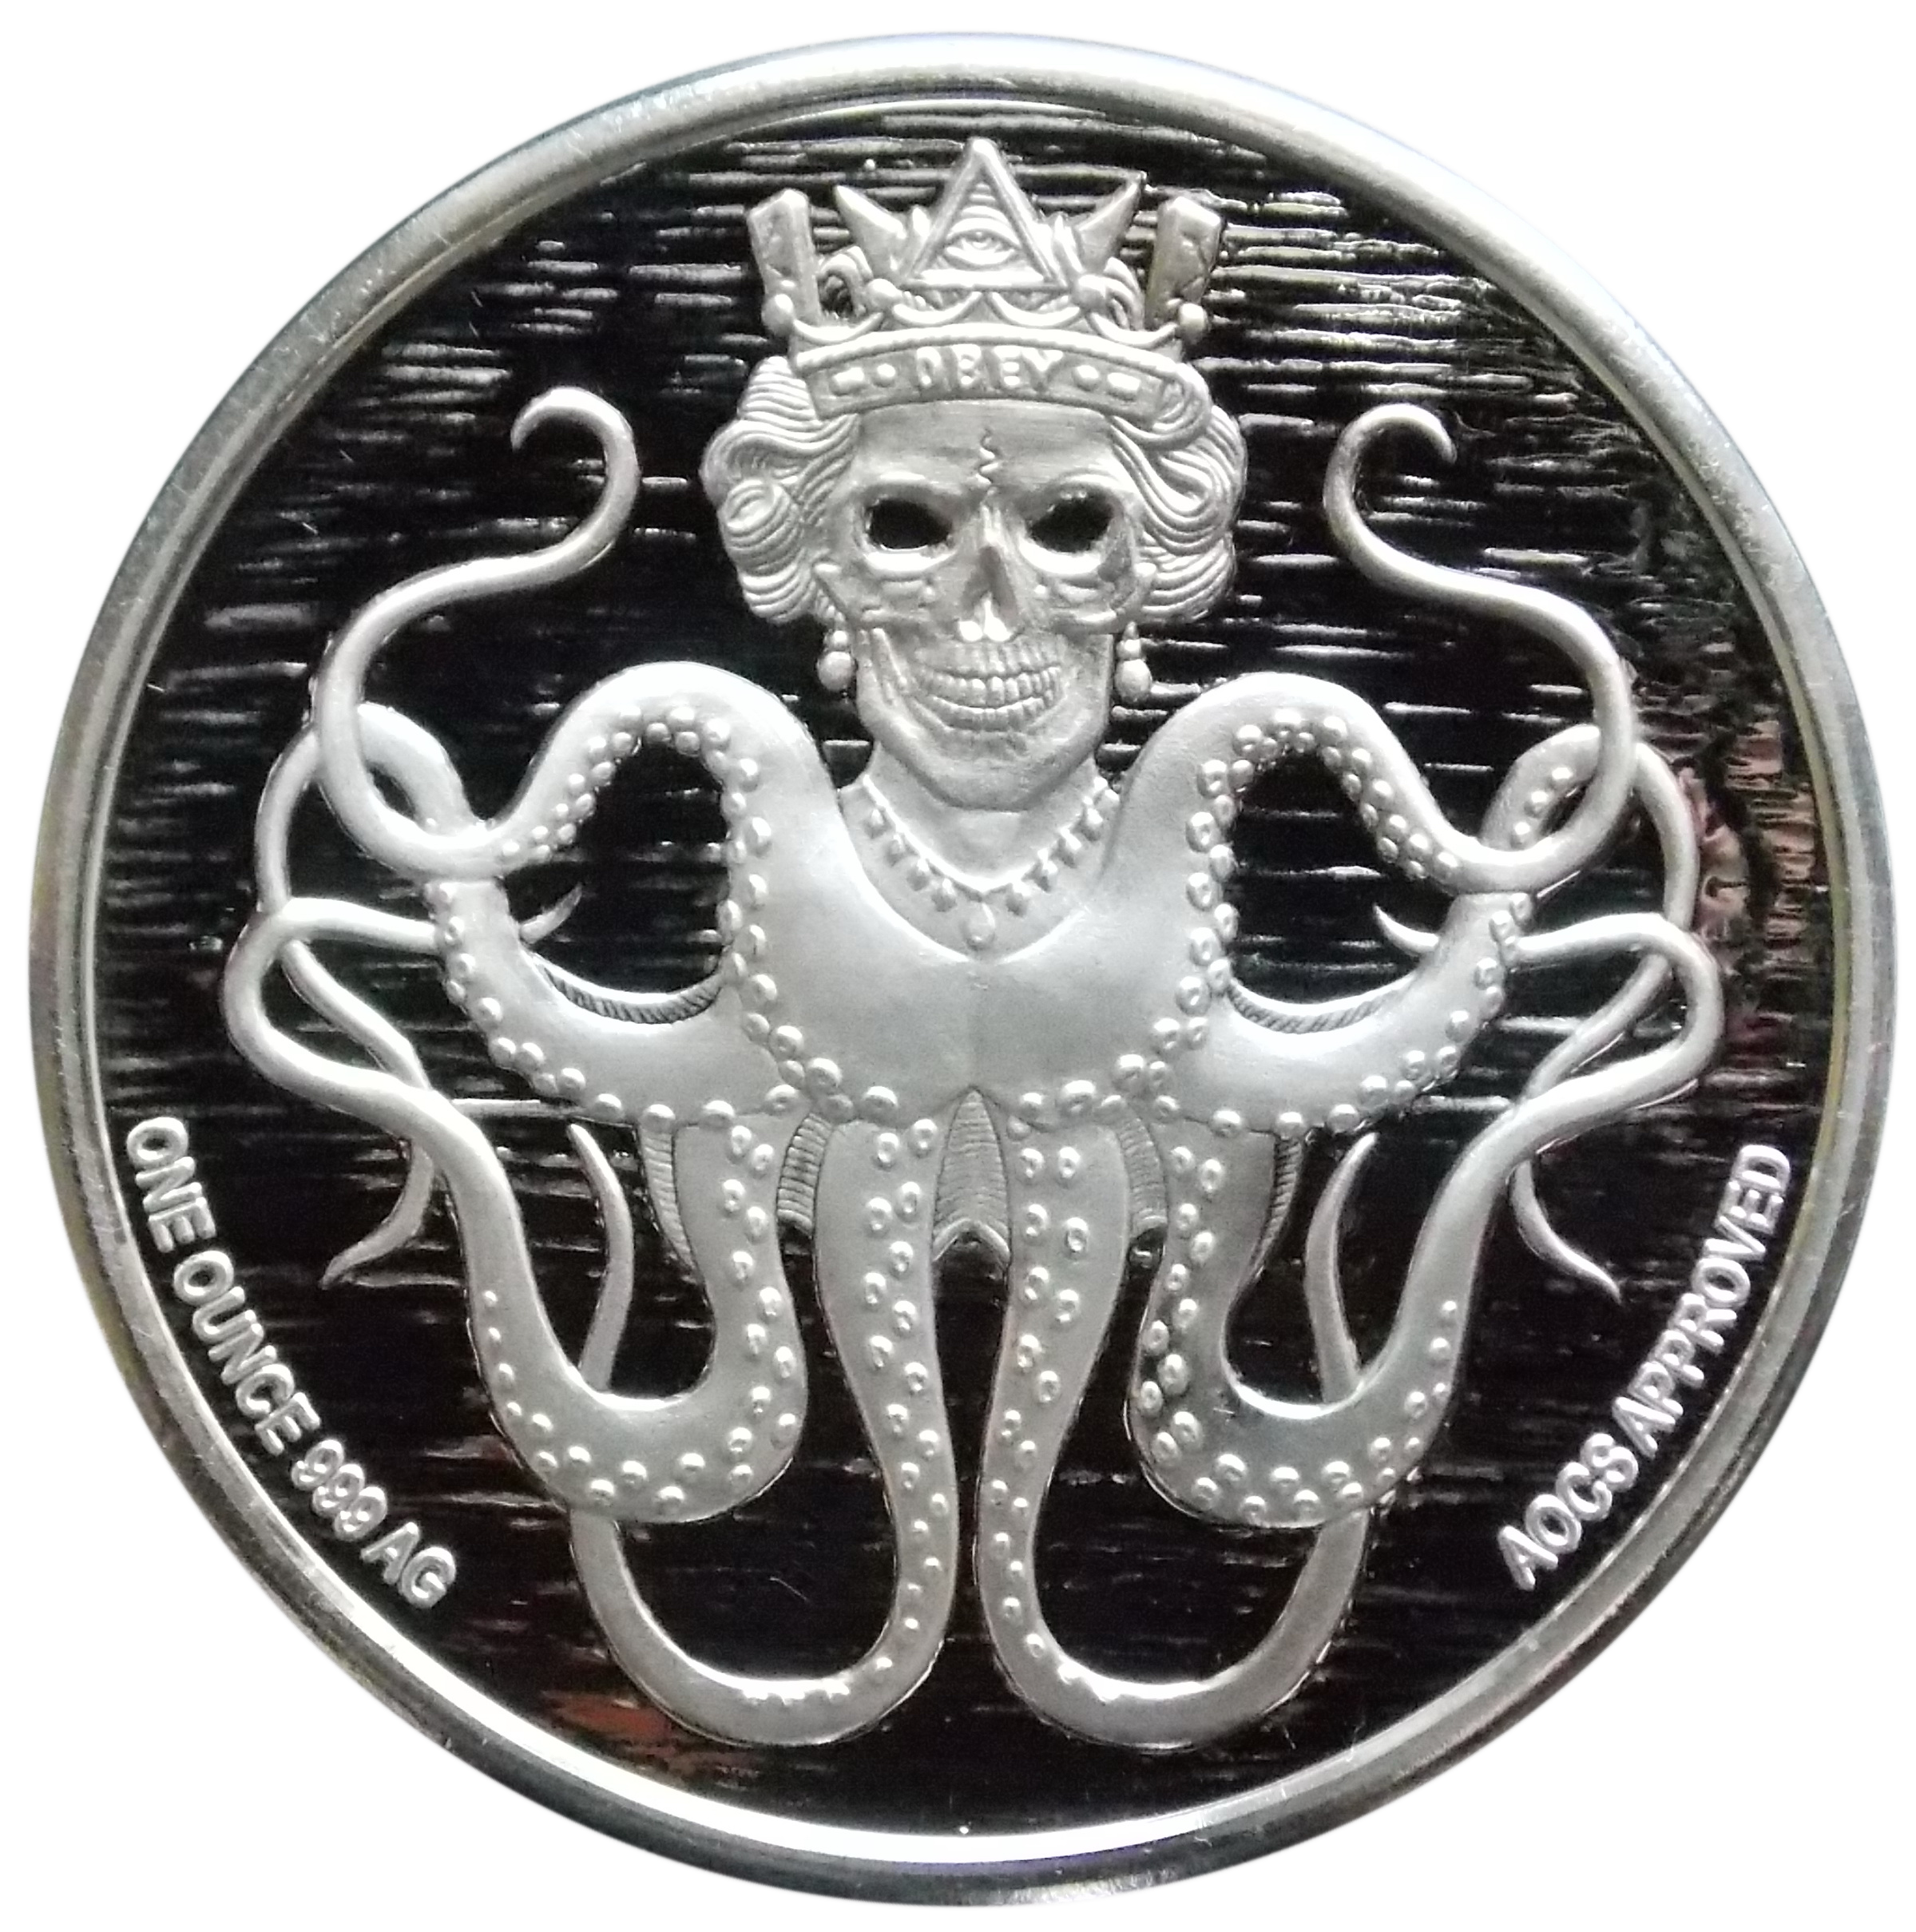 Shield Coin Kraken Bitcoin Silver Free HQ Image PNG Image